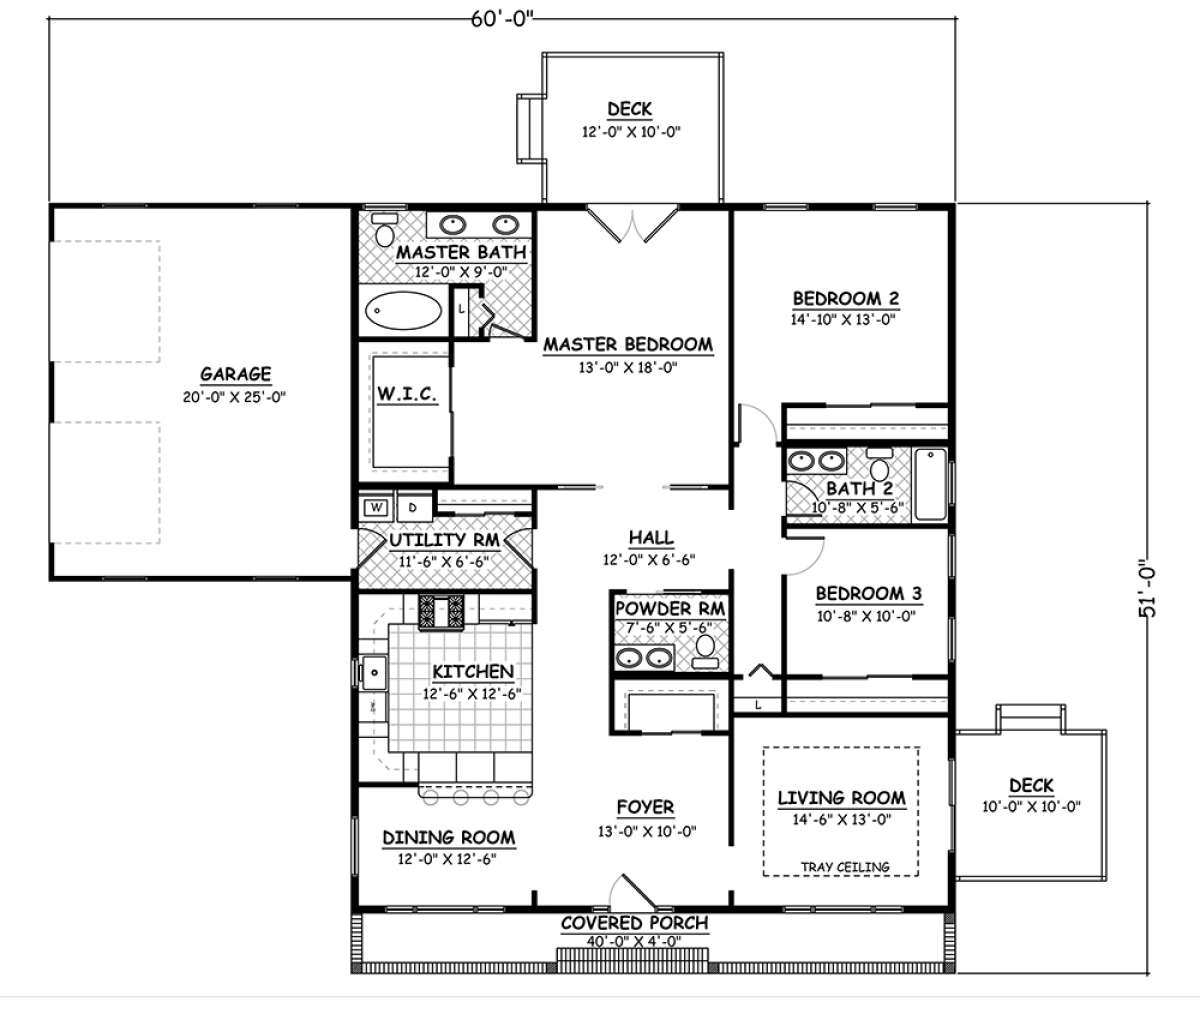 Basement Plan: 1,880 Square Feet, 3 Bedrooms, 2.5 Bathrooms - 526-00011